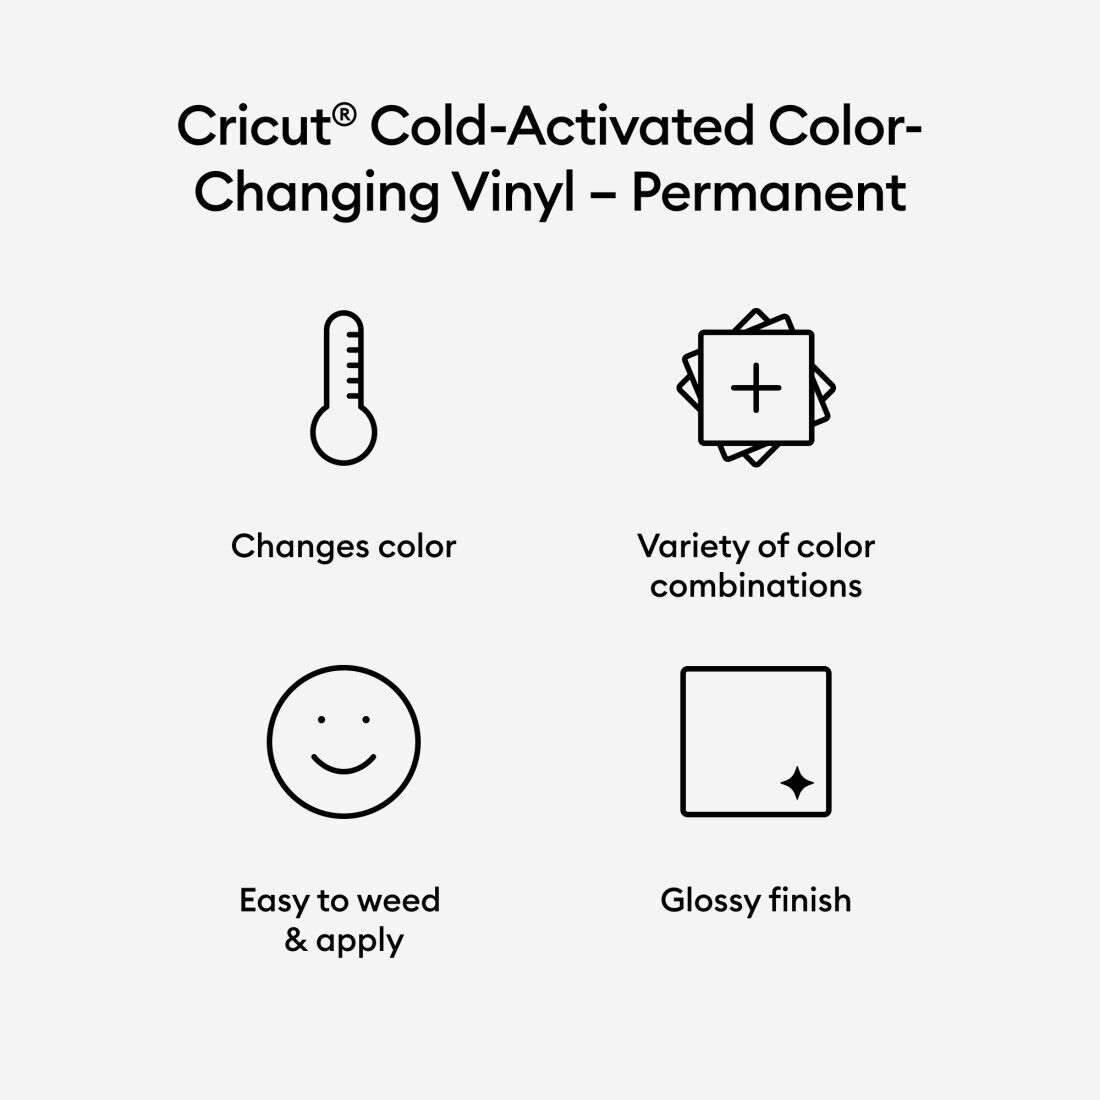 Cricut Color-Changing Permanent Vinyl - Cold-Activated